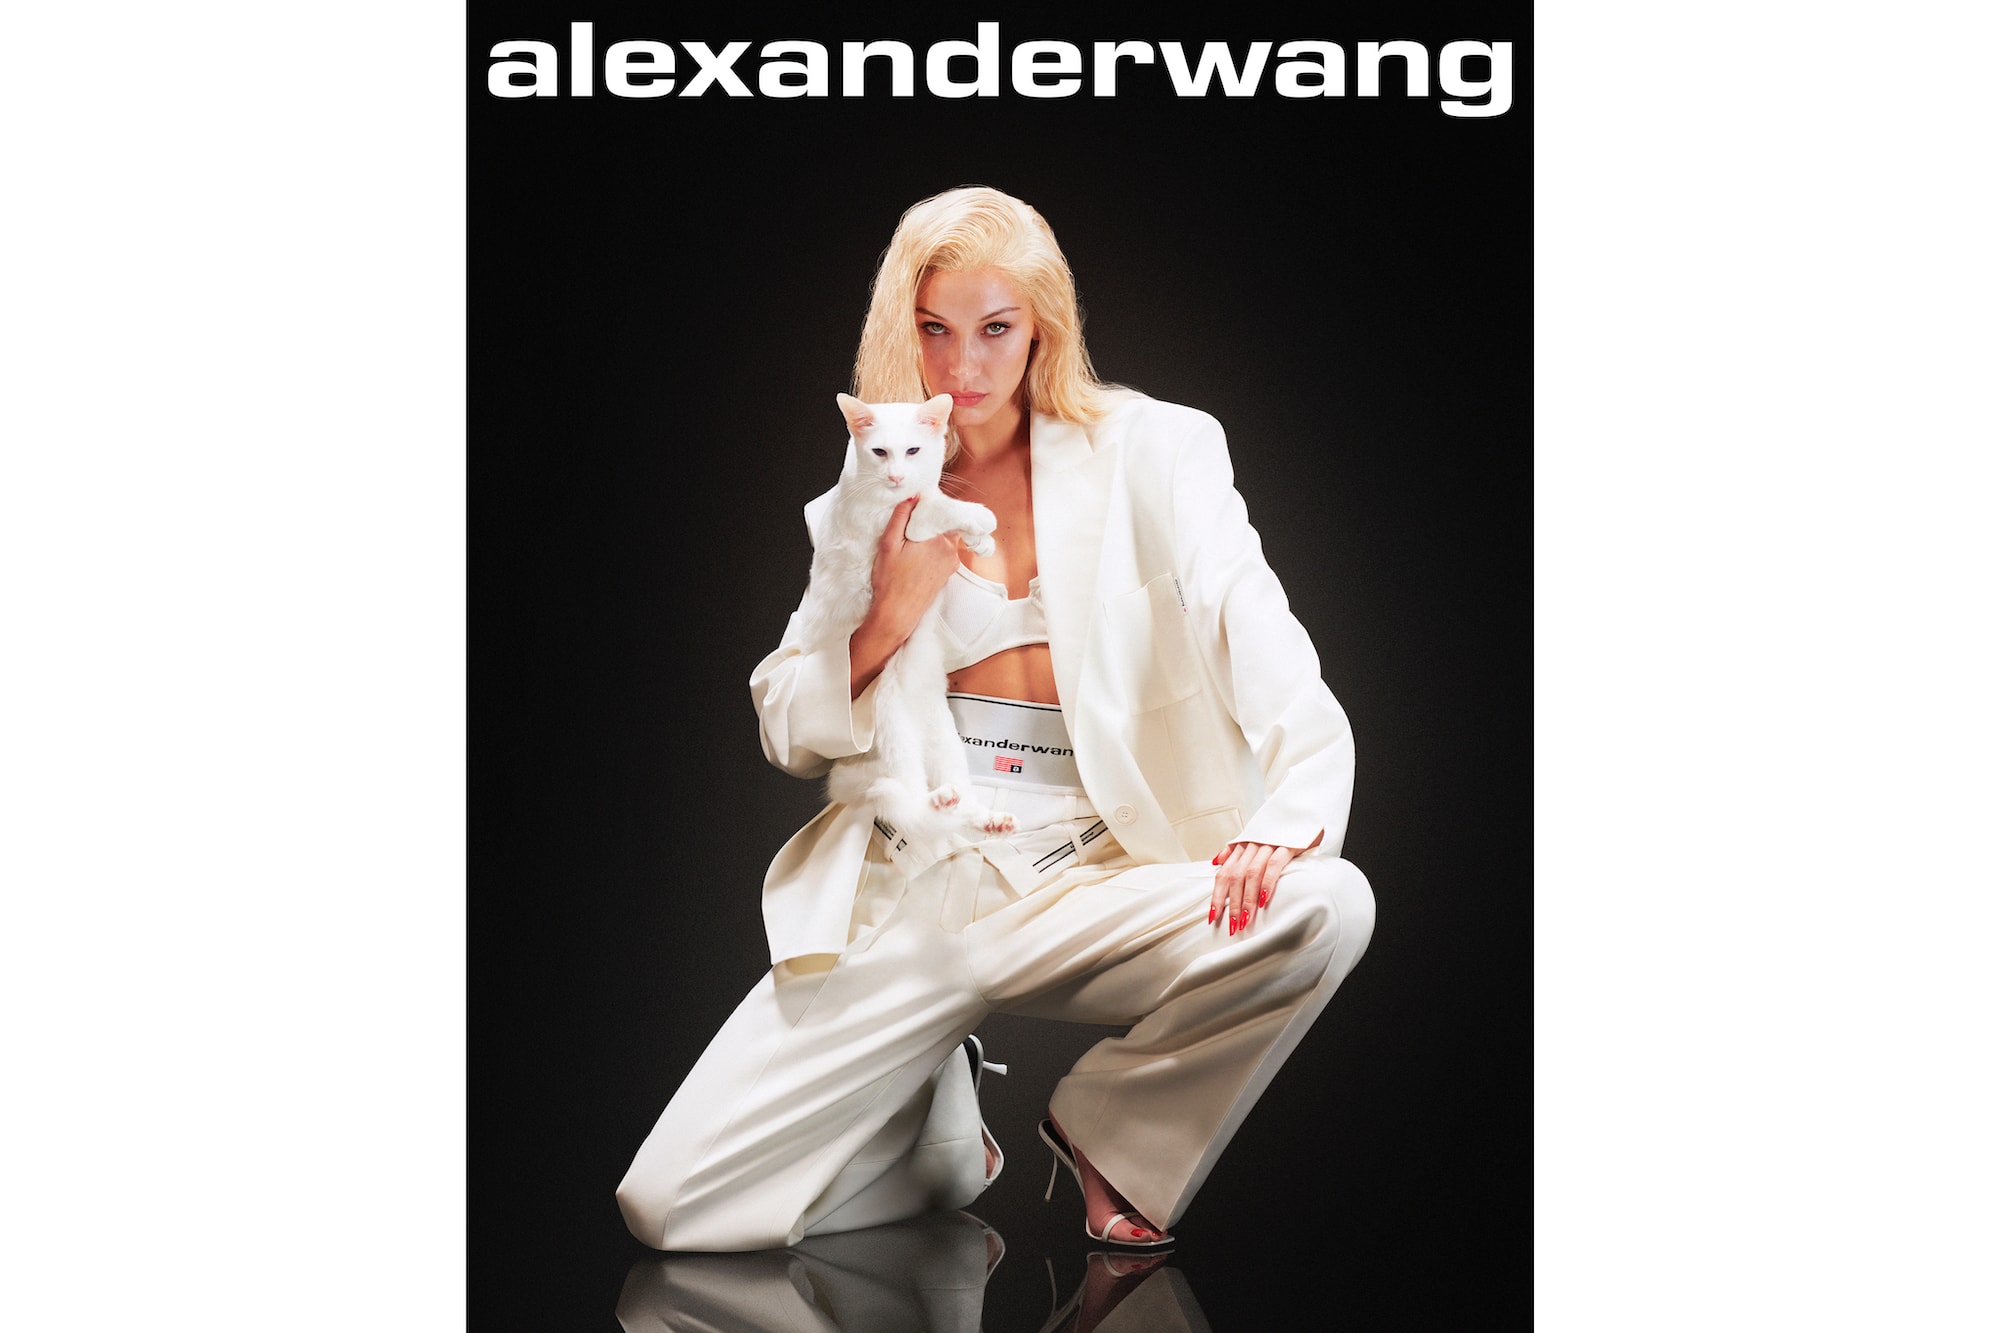 Alexander Wang Collection 1 Bella Hadid Campaign New York Statue of Liberty Ad Brianna Capozzi